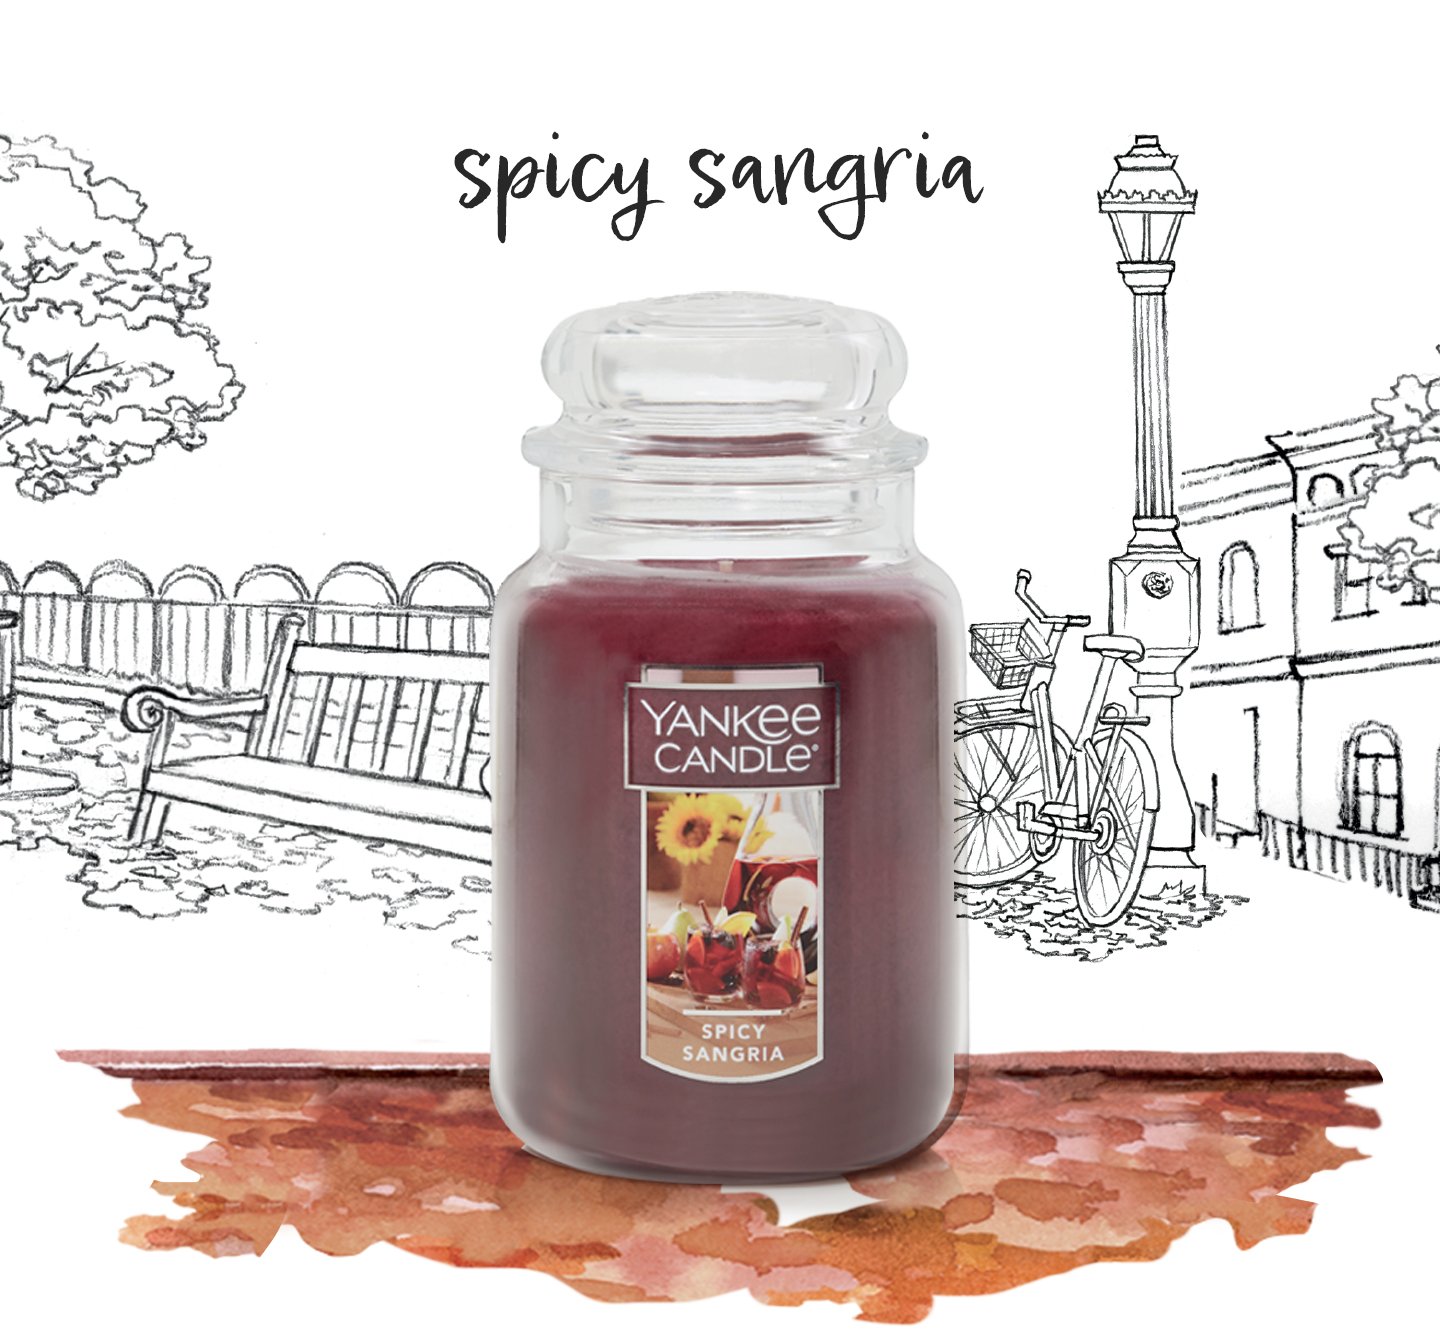 spicy sangria signature large tumbler candle in illustrated city park scene